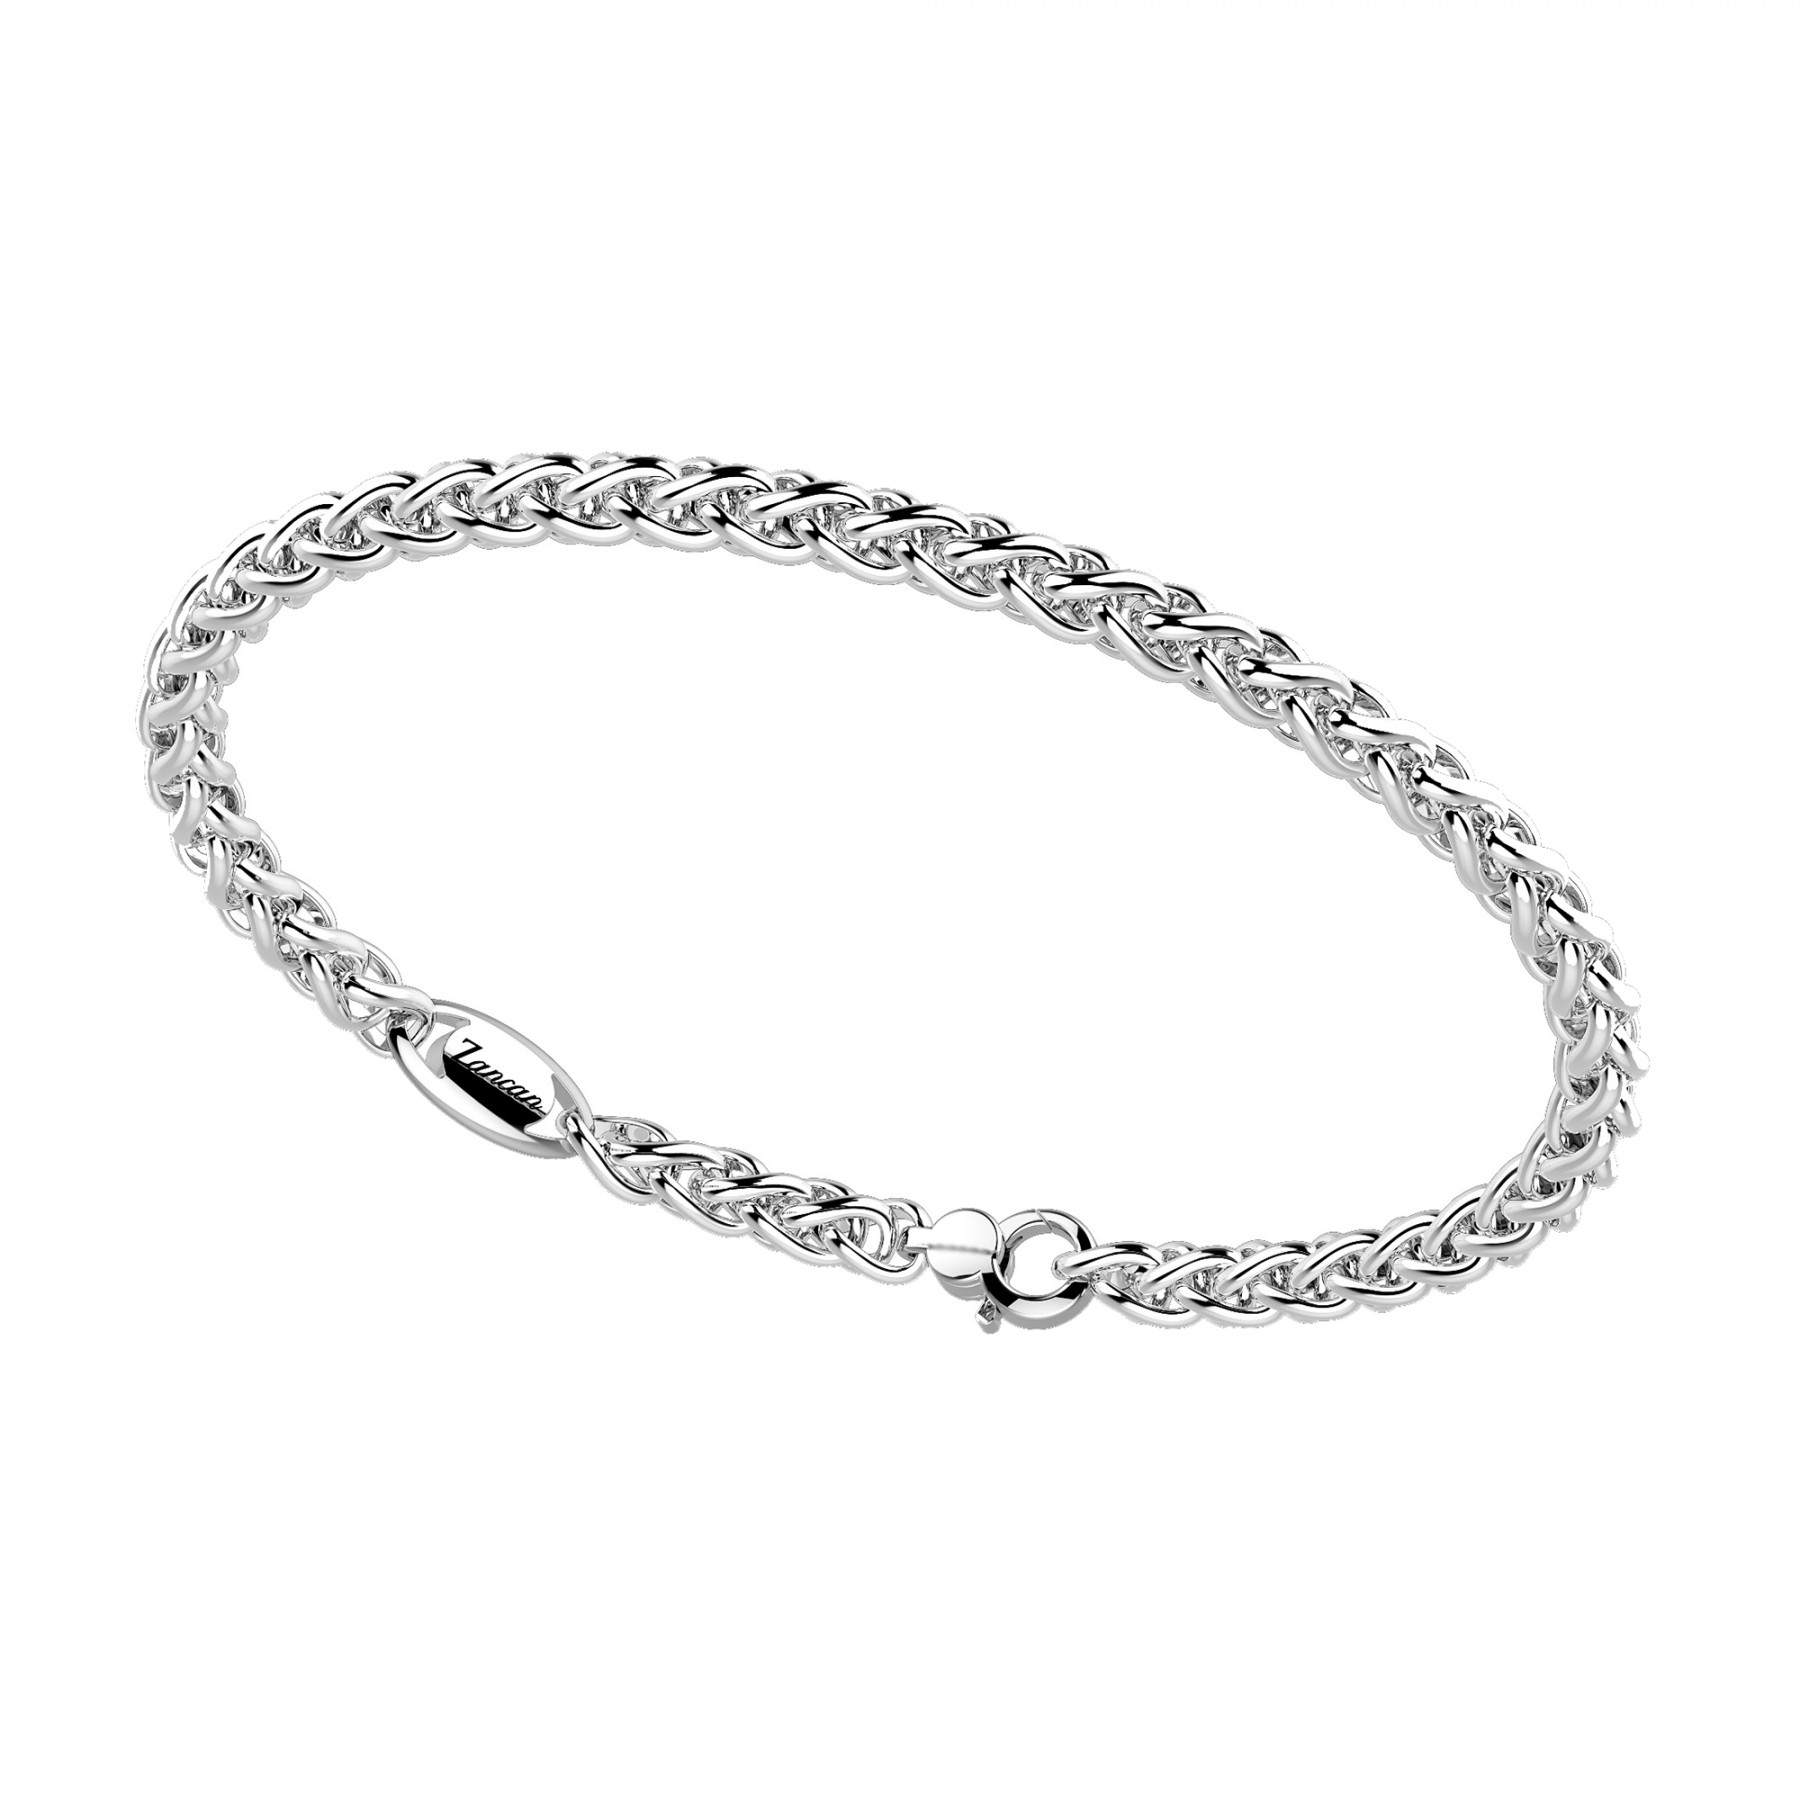 Zancan silver chain bracelet